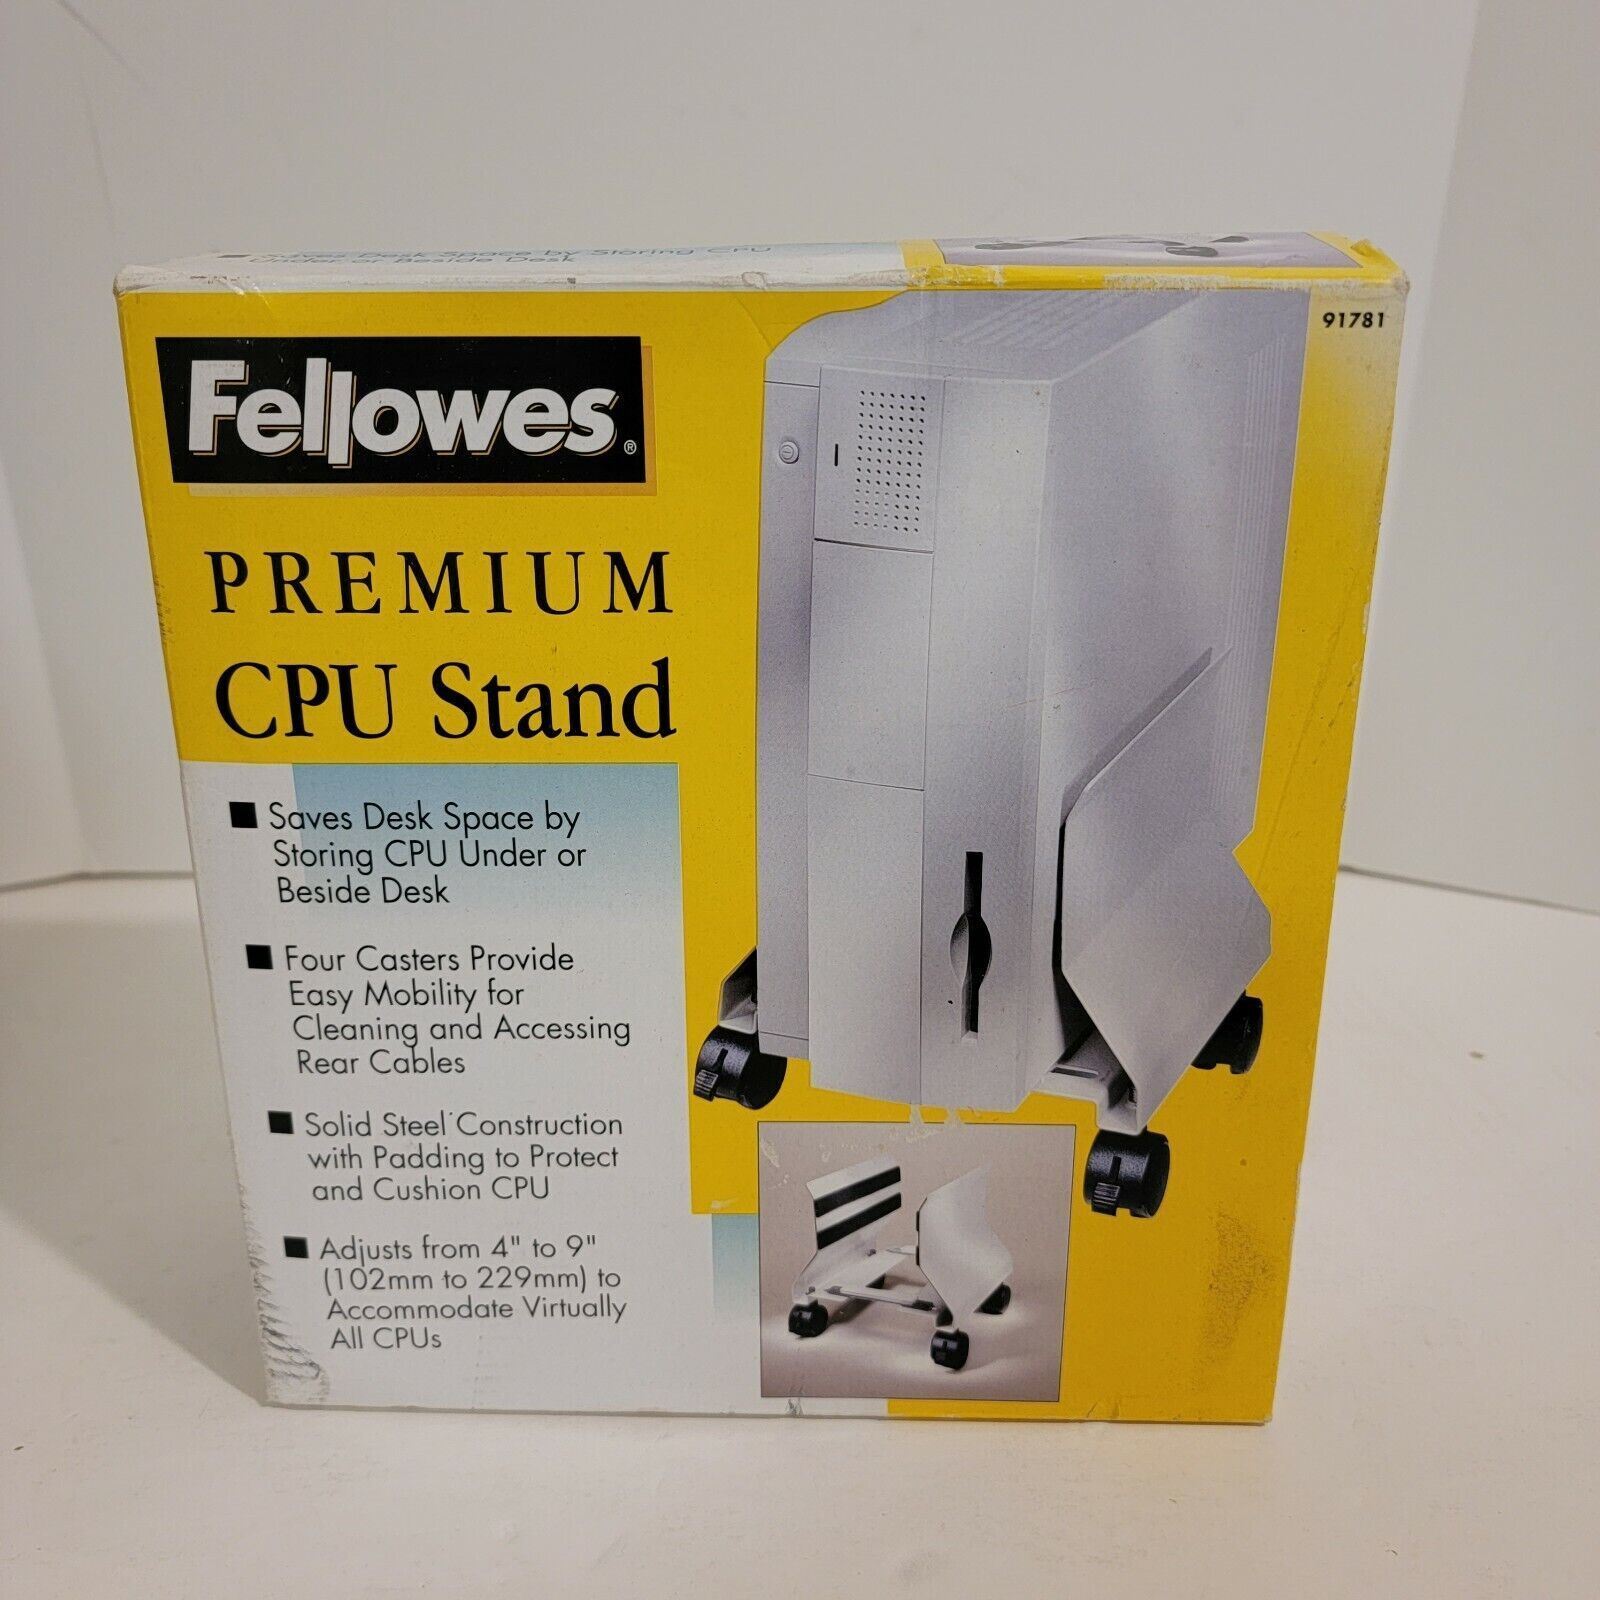 FELLOWES, INC. 91781 FELLOWES PREMIUM CPU STAND